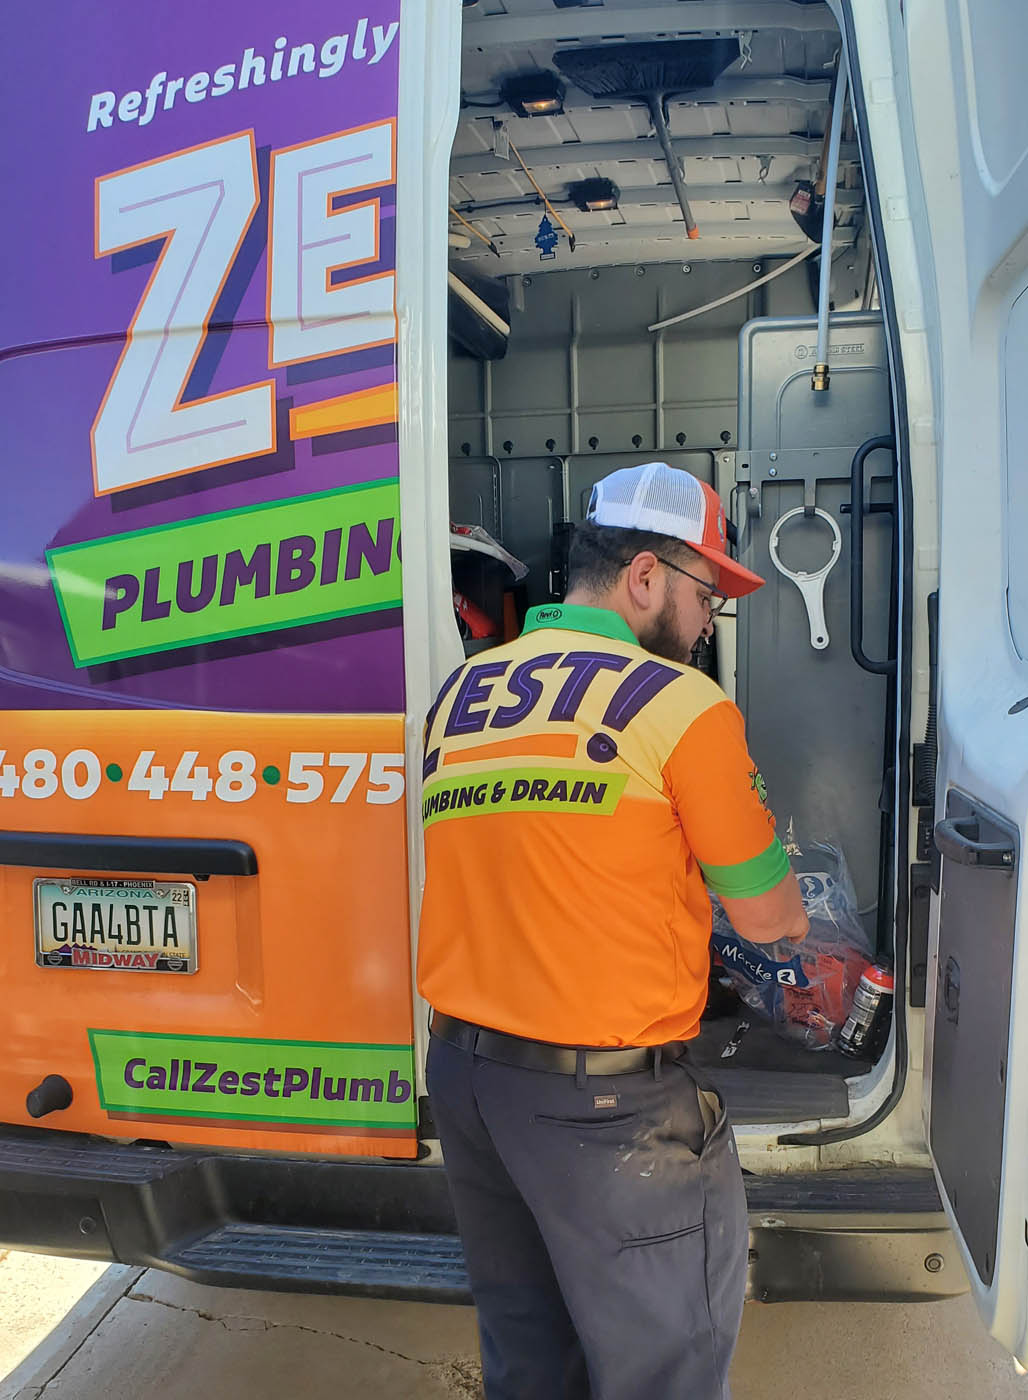 A Zest Plumbing & Drain technician working on plumbing in Phoenix, AZ.